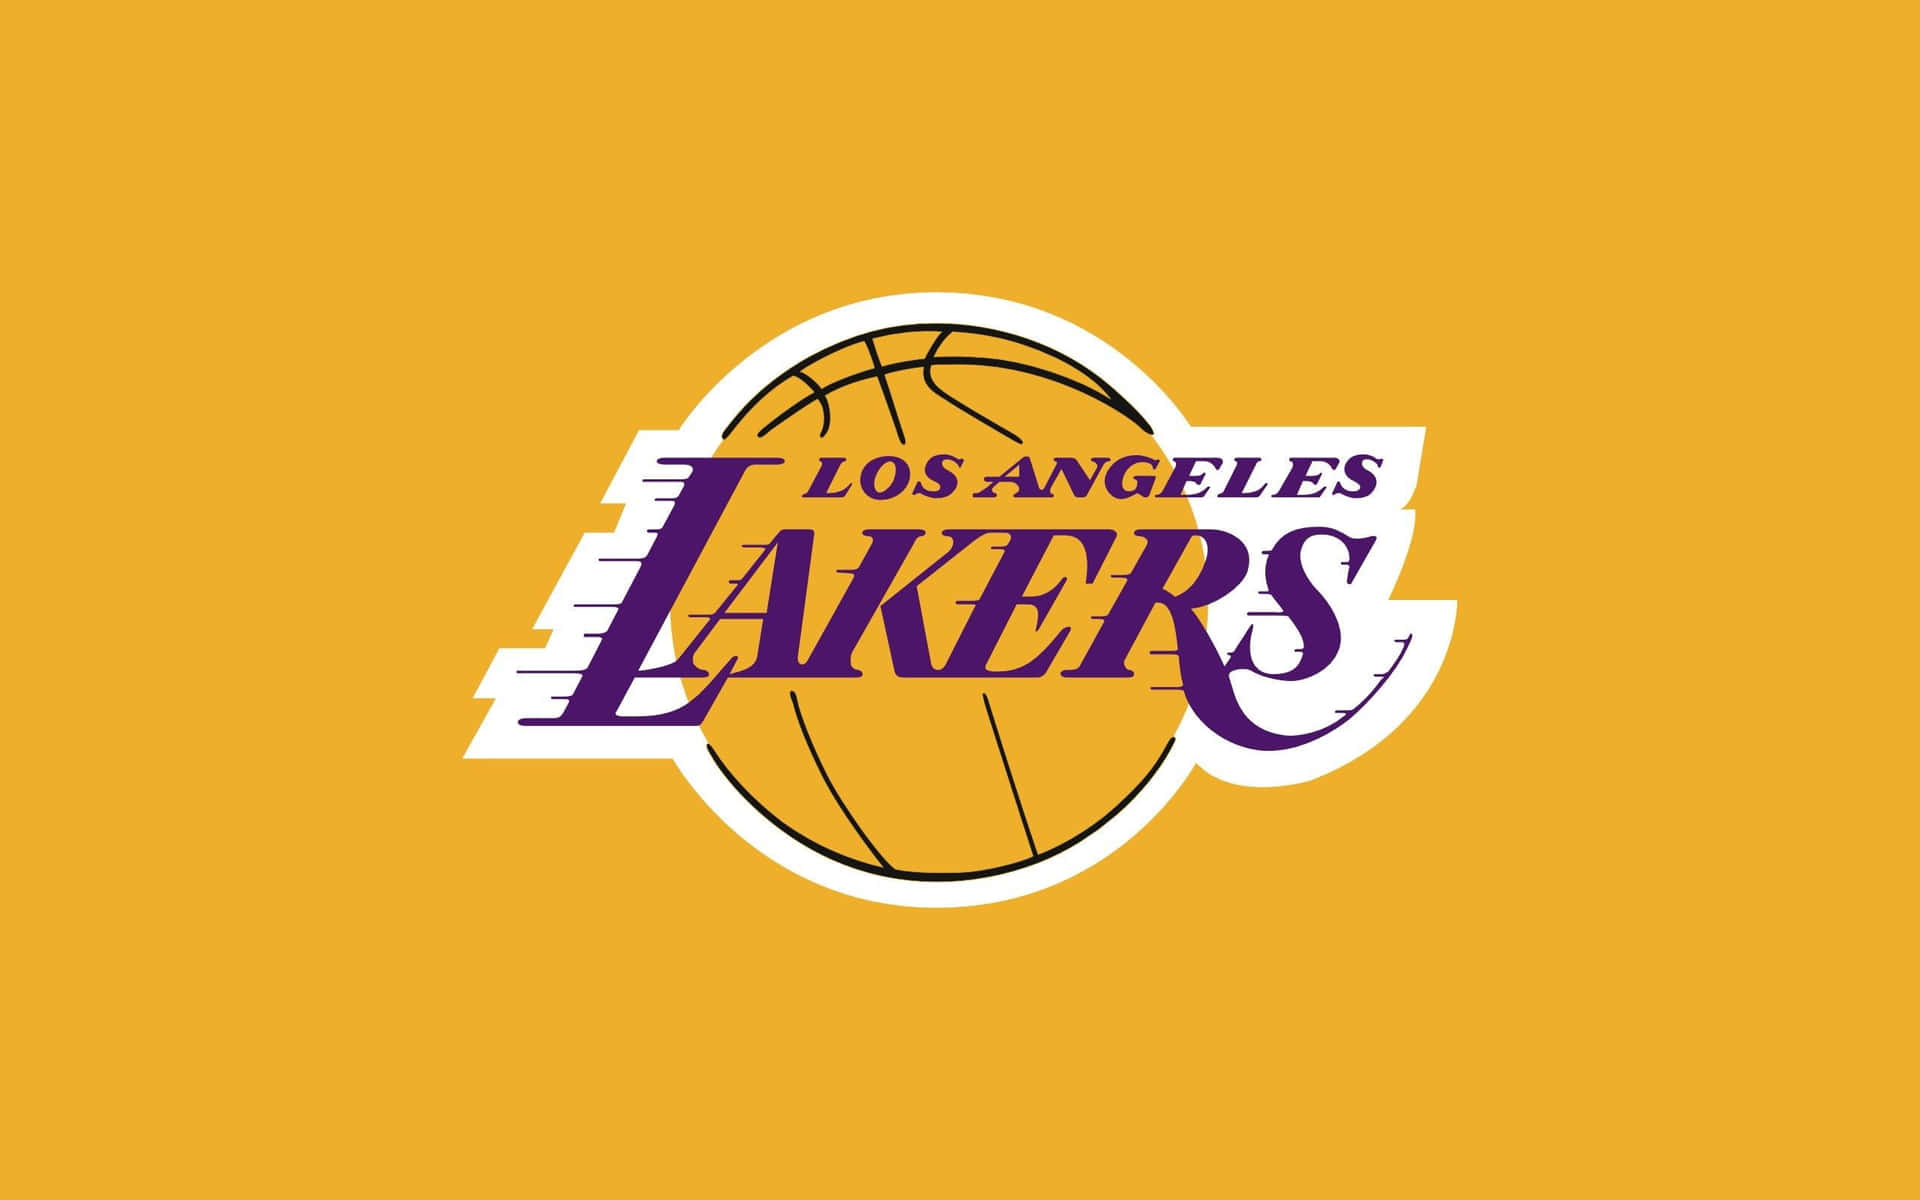 Losangeles Lakers!